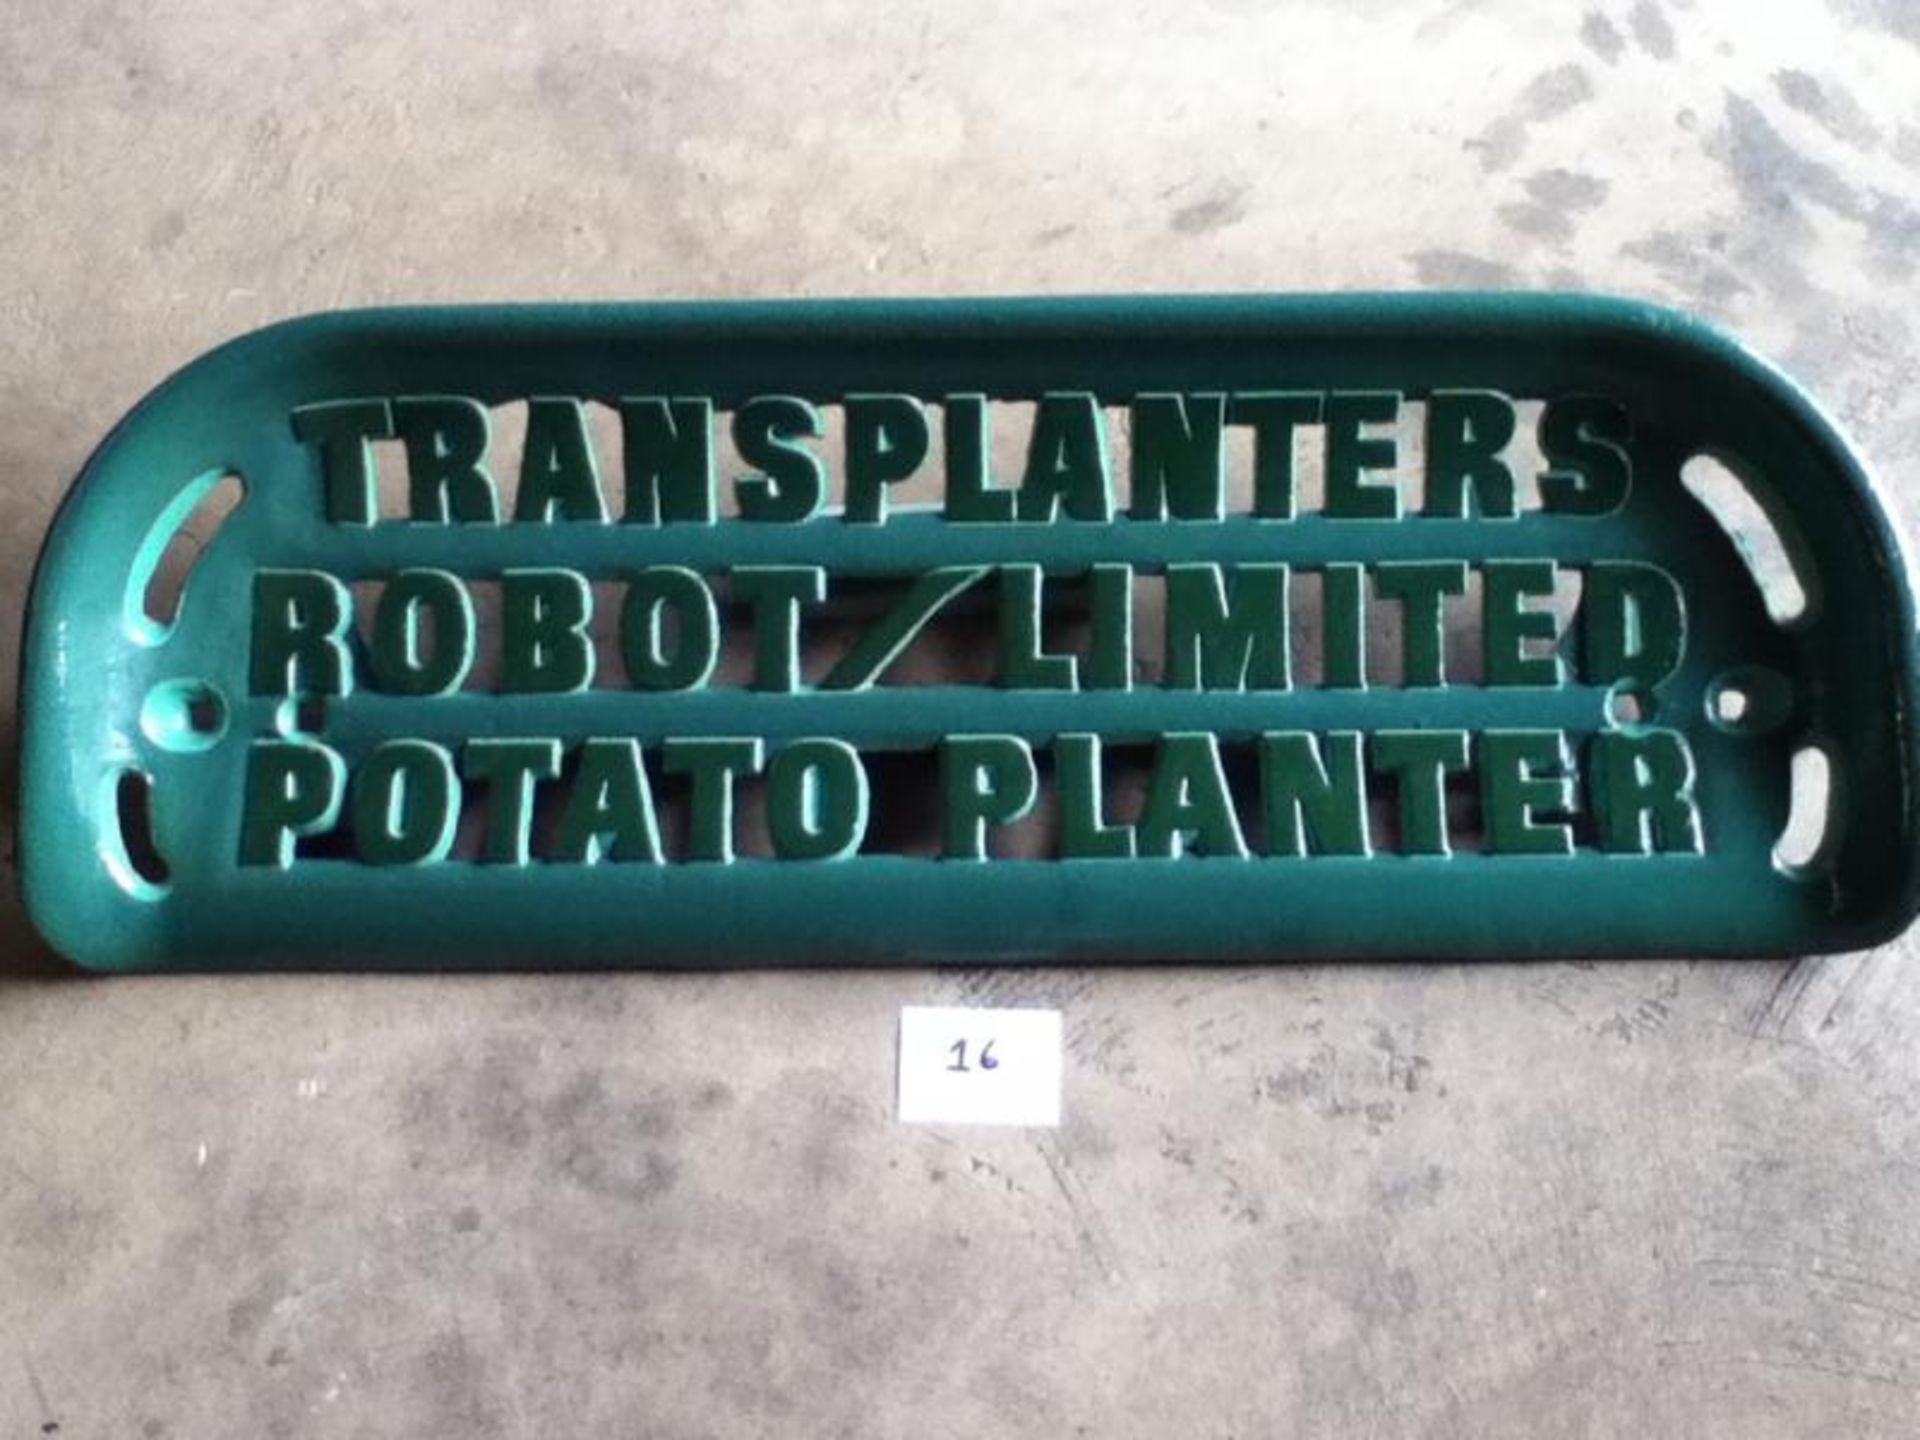 Transplanters Robot/limited, potato planter - a cast iron seat